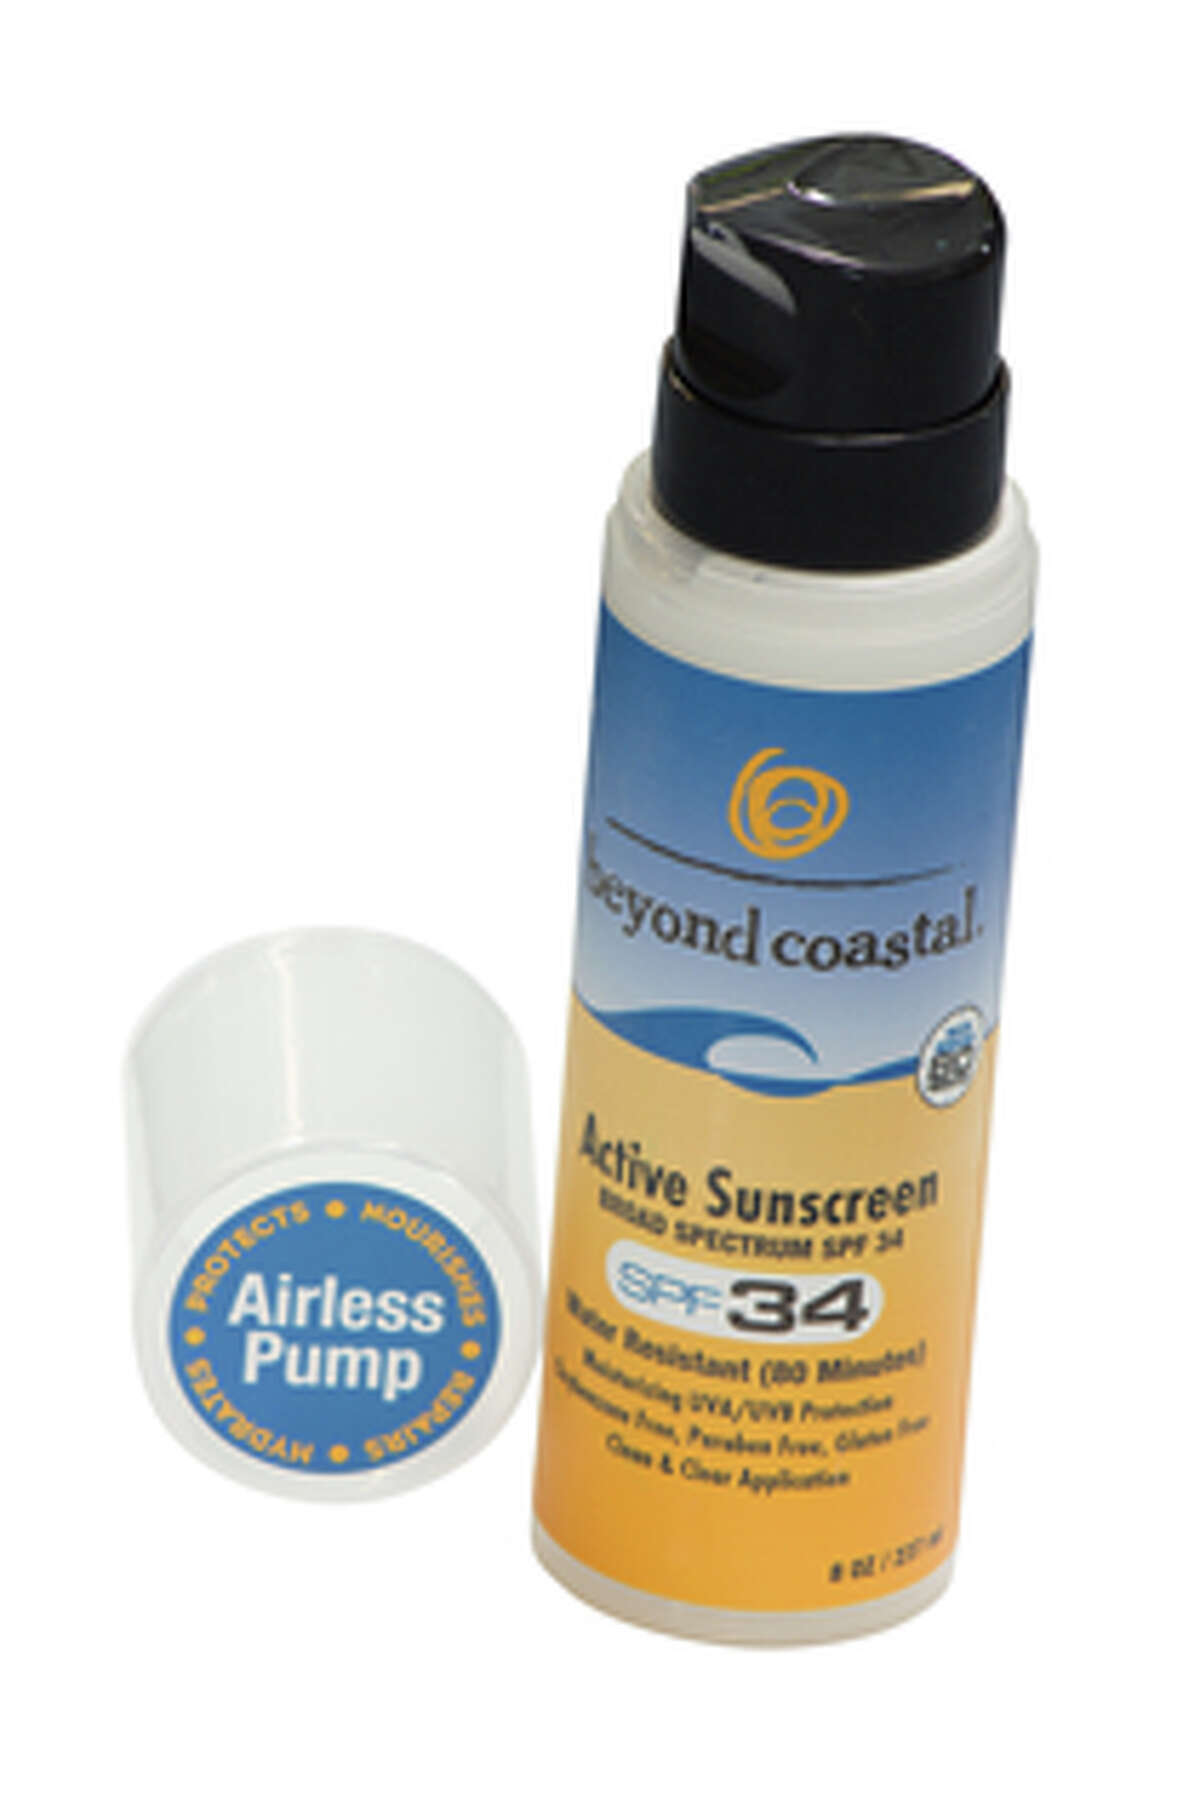 Beyond Coastal Active Sunscreen Airless Pump